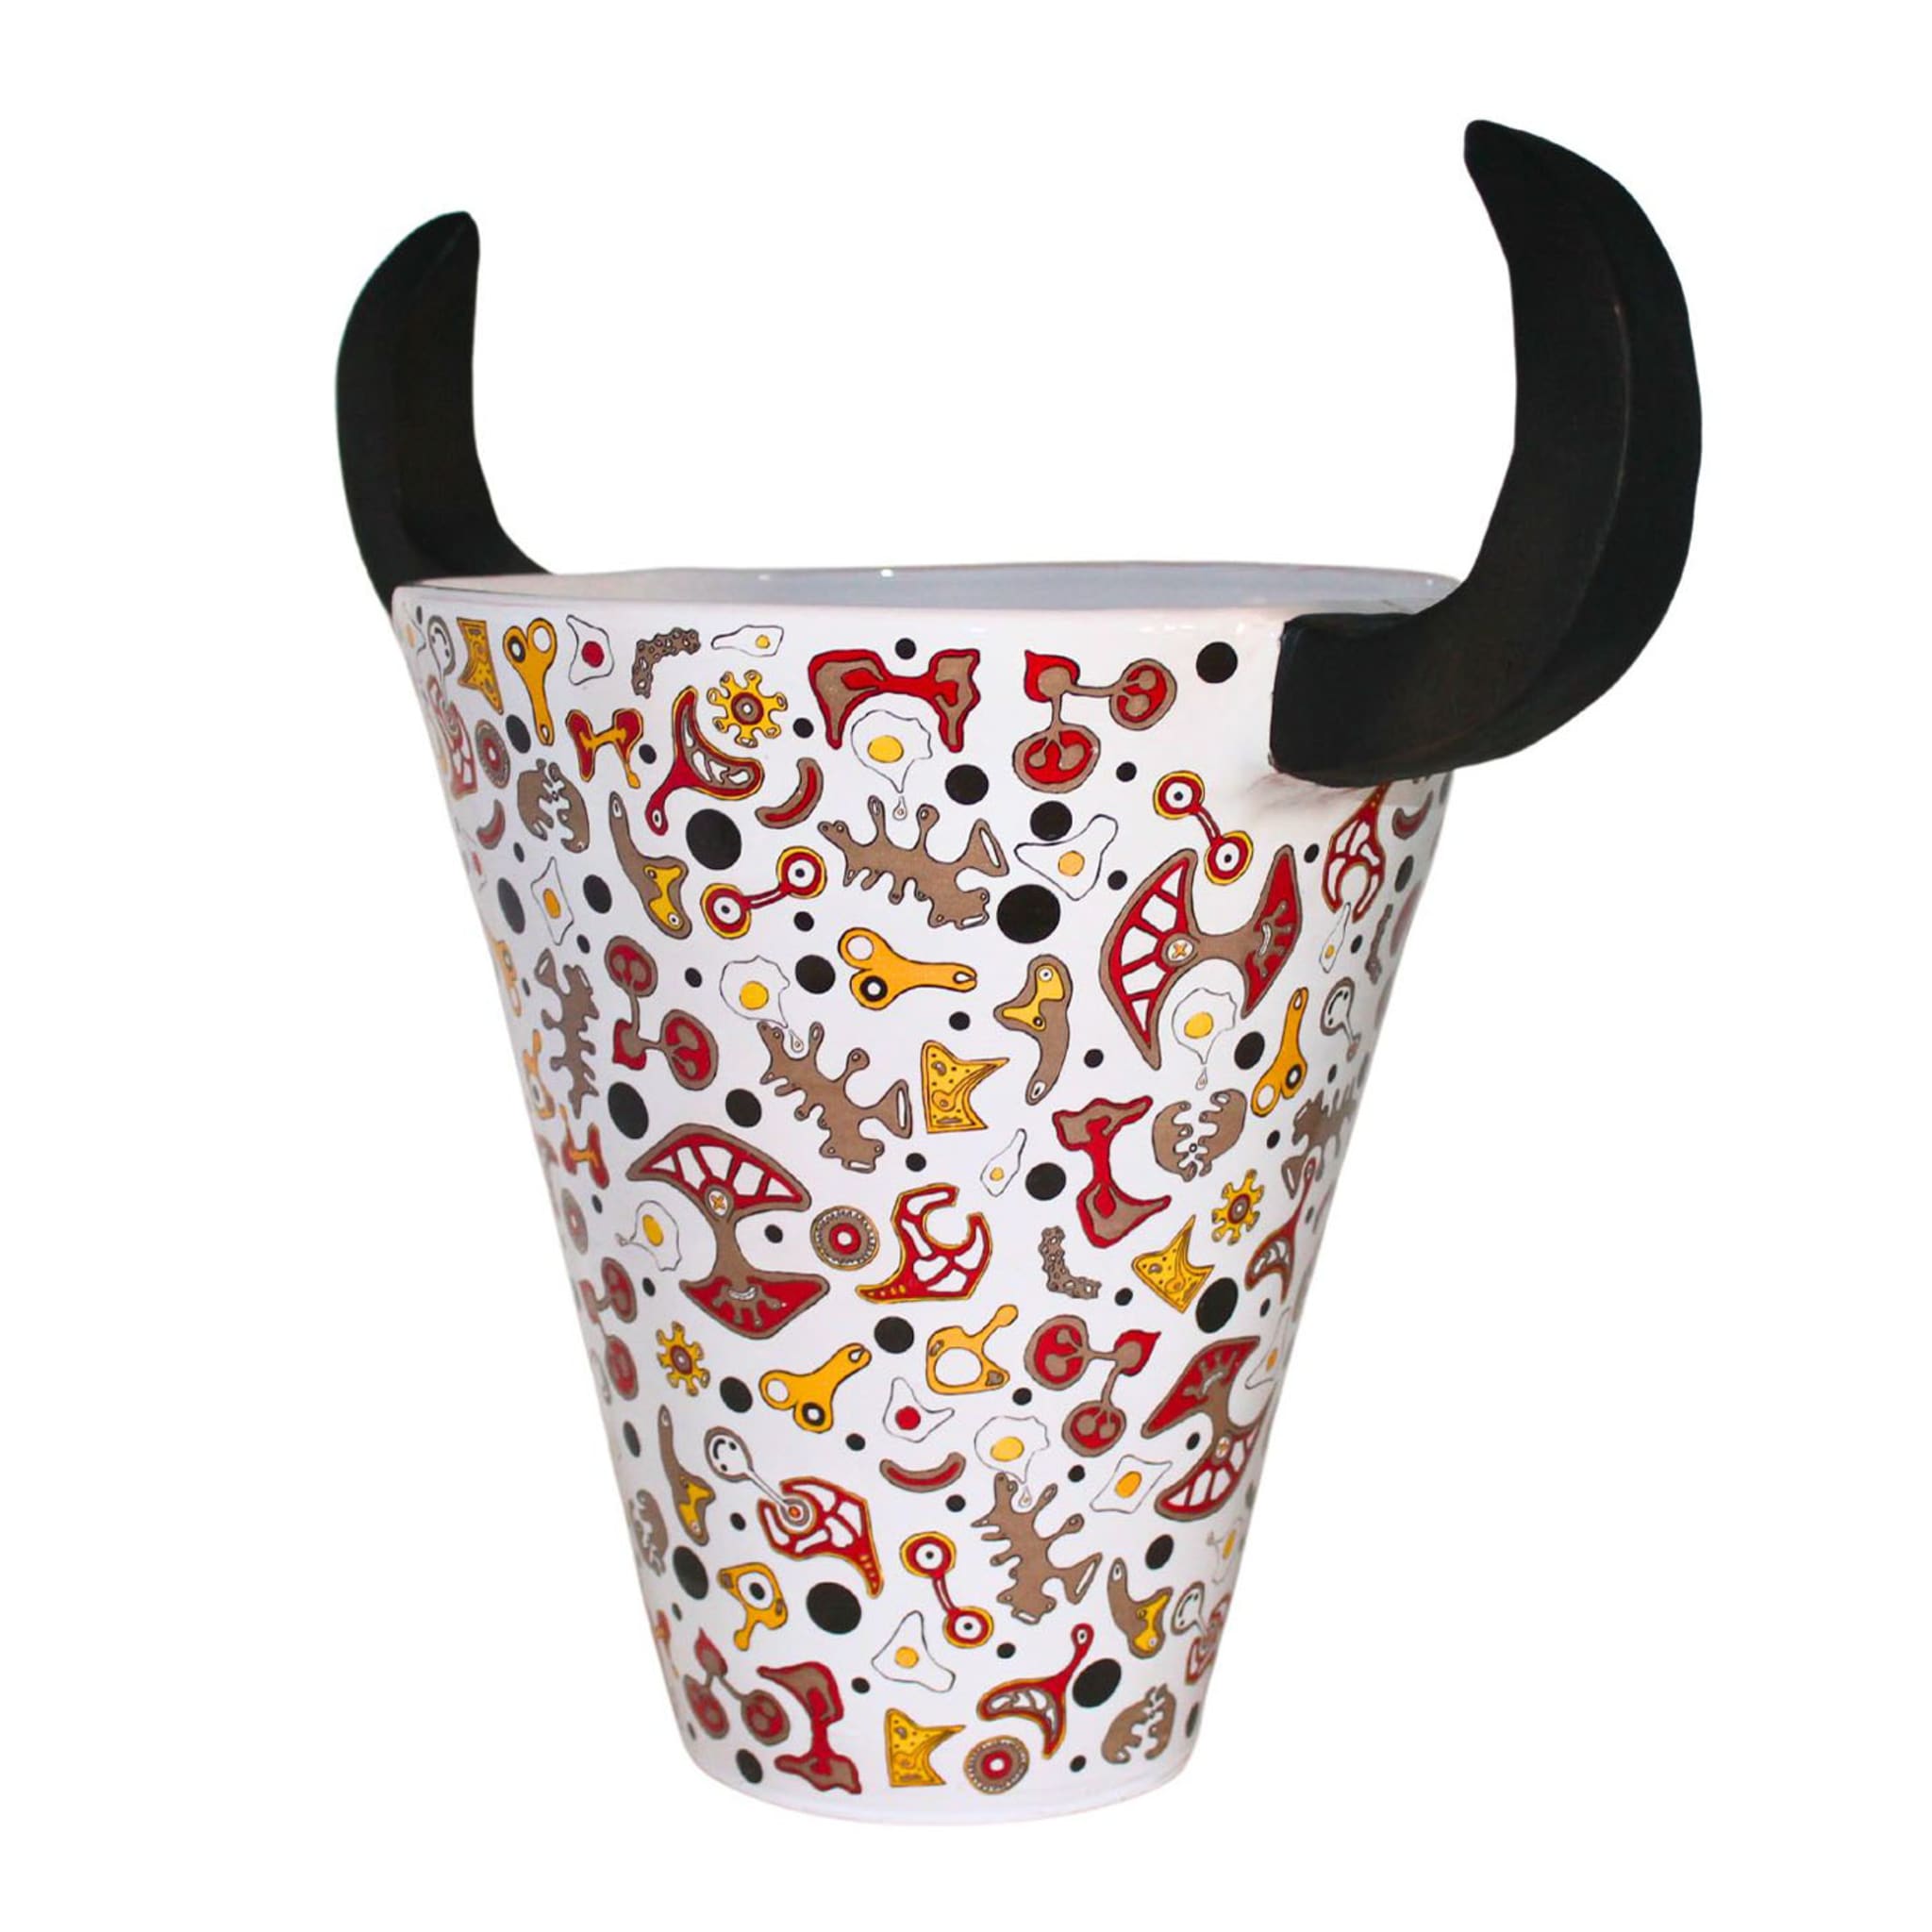 Bull Microcell Vase - Alternative view 1